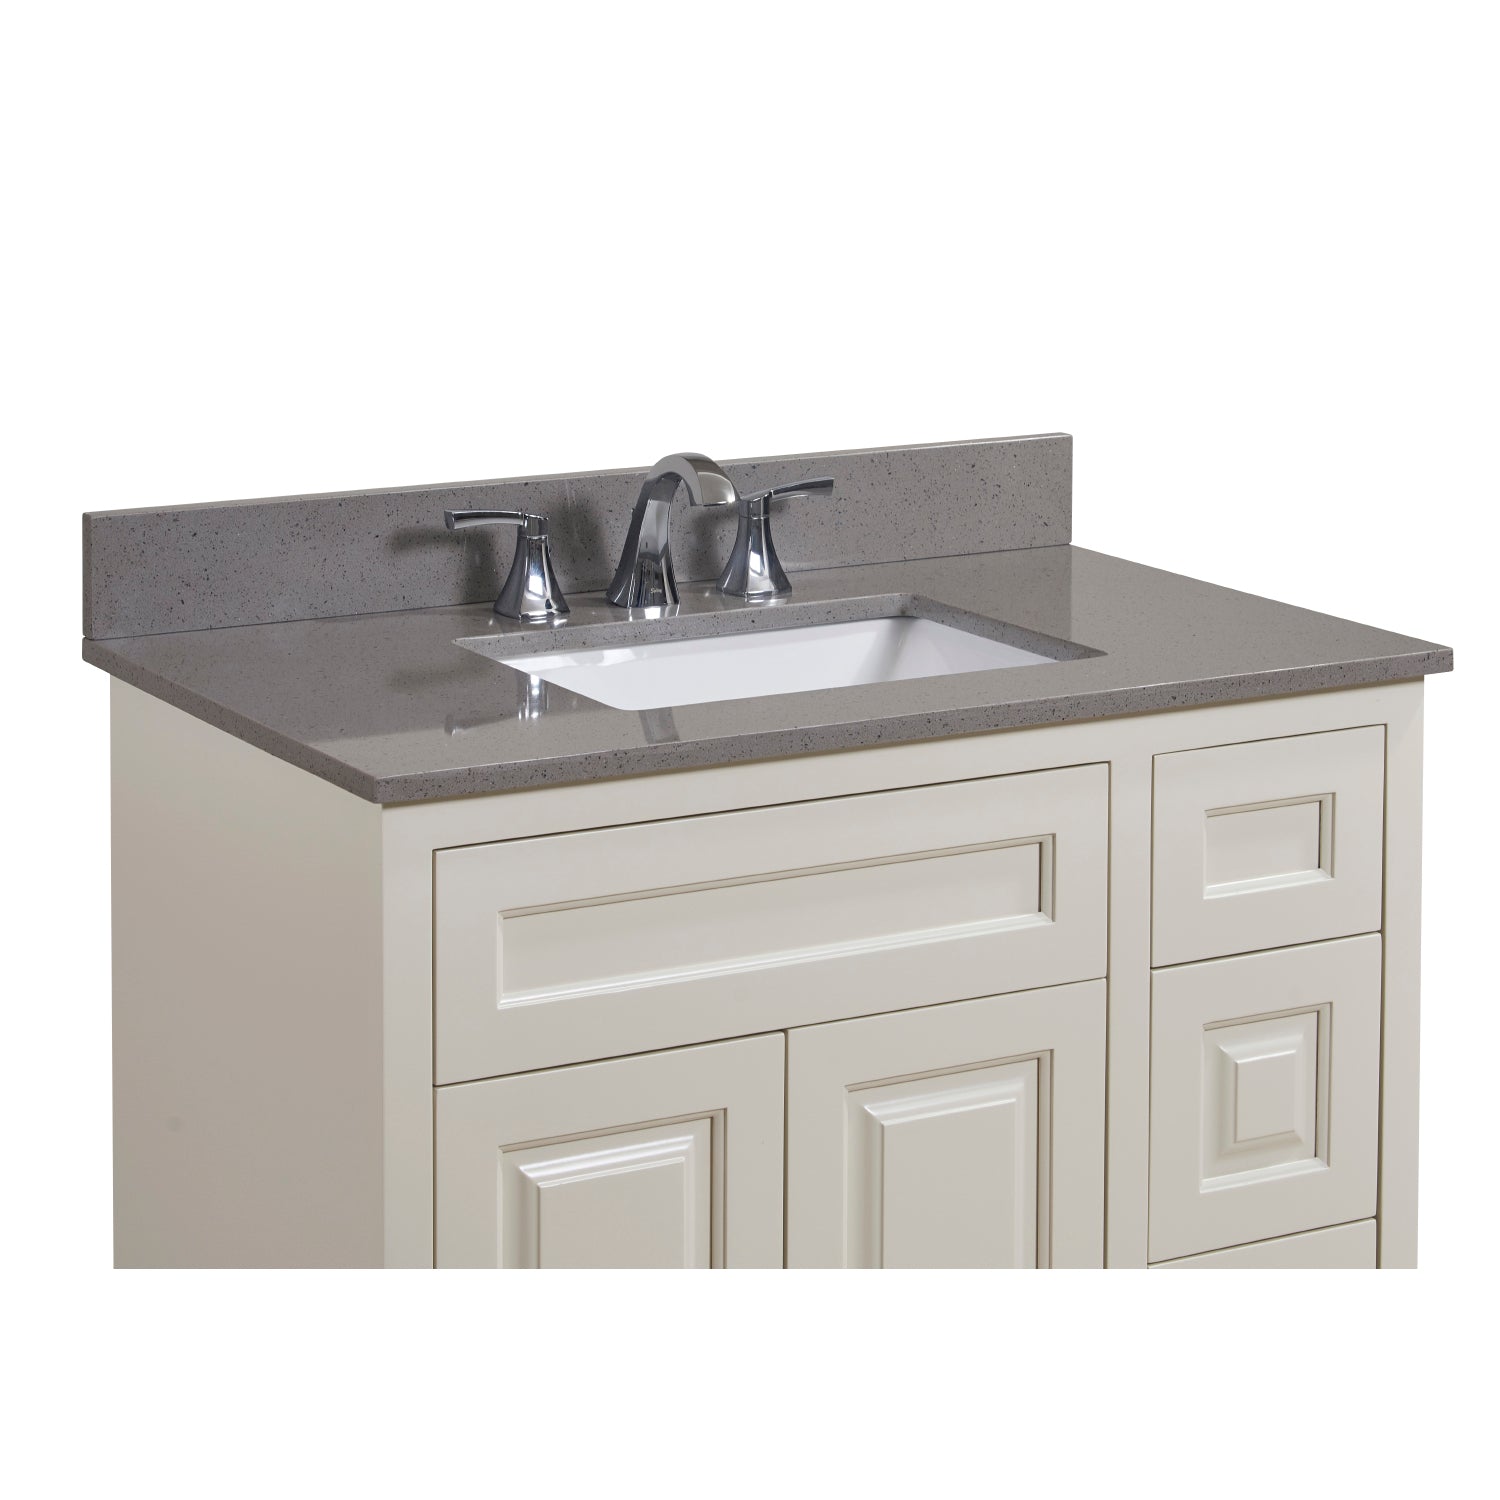 Imperia Single Sink Bathroom Vanity Countertop in Mountain Gray